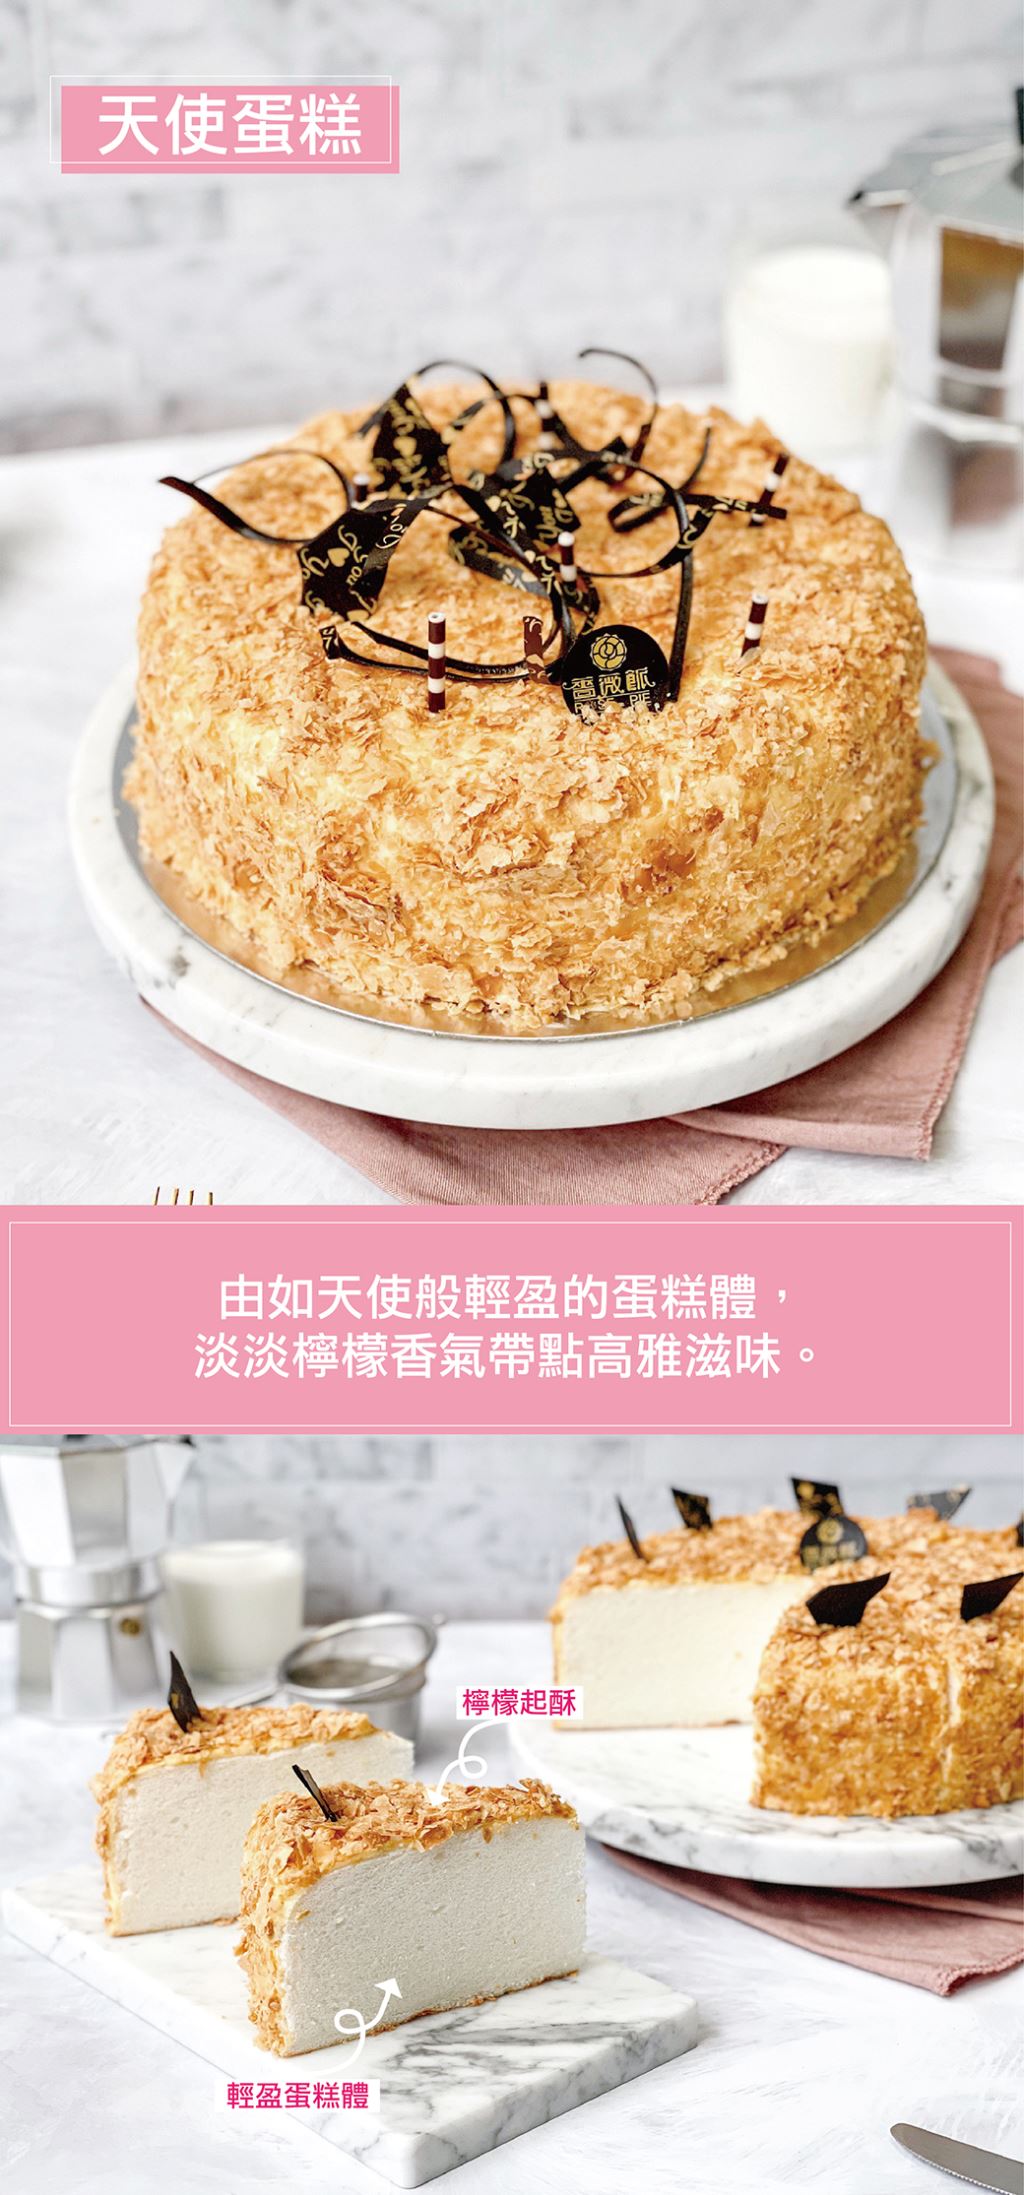 Kit Wai's kitchen : 草莓天使蛋糕 ~ Strawberry Angel Cake